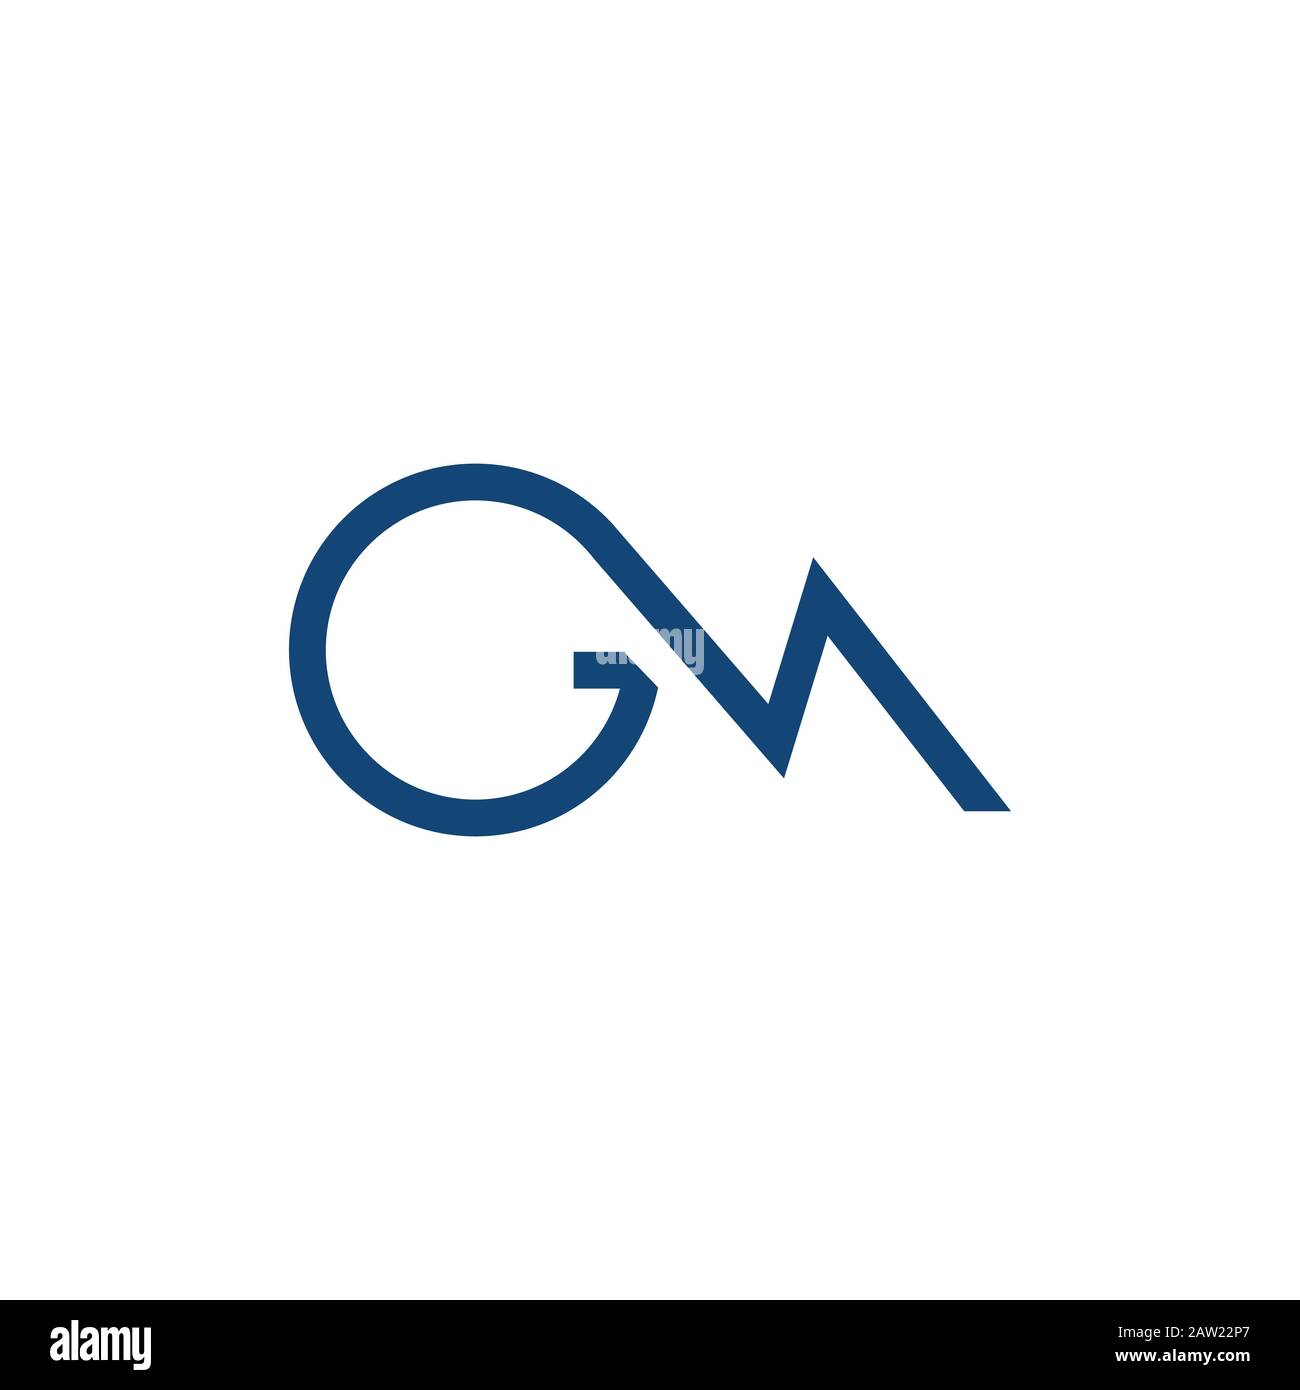 Premium Vector  Gm logo in unique, luxurious, mature, and elegant style. a  modern classic monogram serif font.